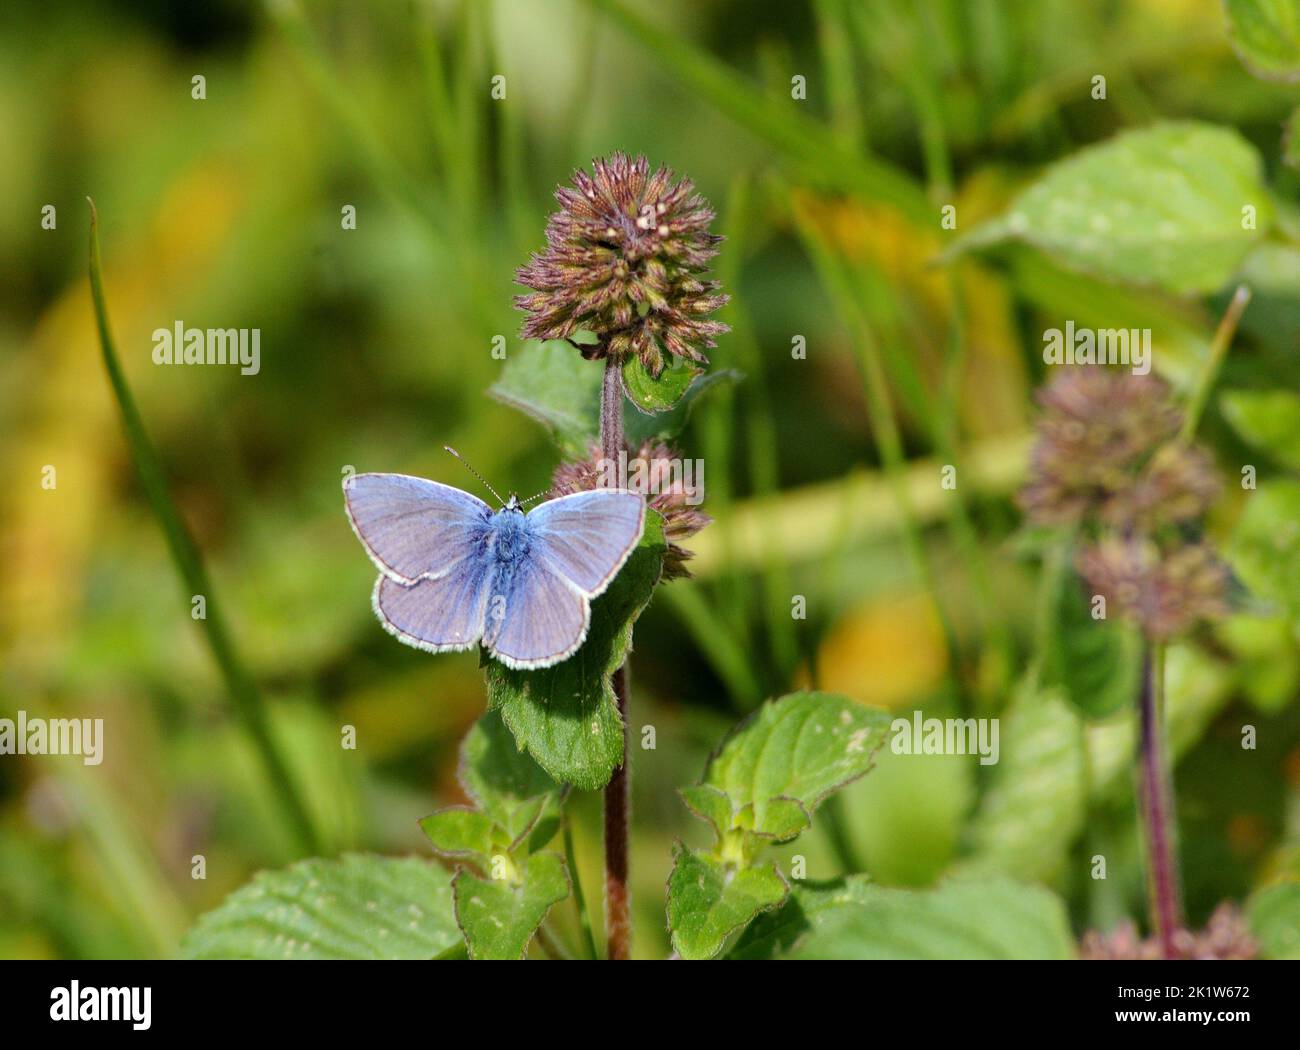 A Common Blue Butterfly, Castle Shore Park, Portchester pic Mike Walker, Mike Walker Pictures, 2014 Banque D'Images